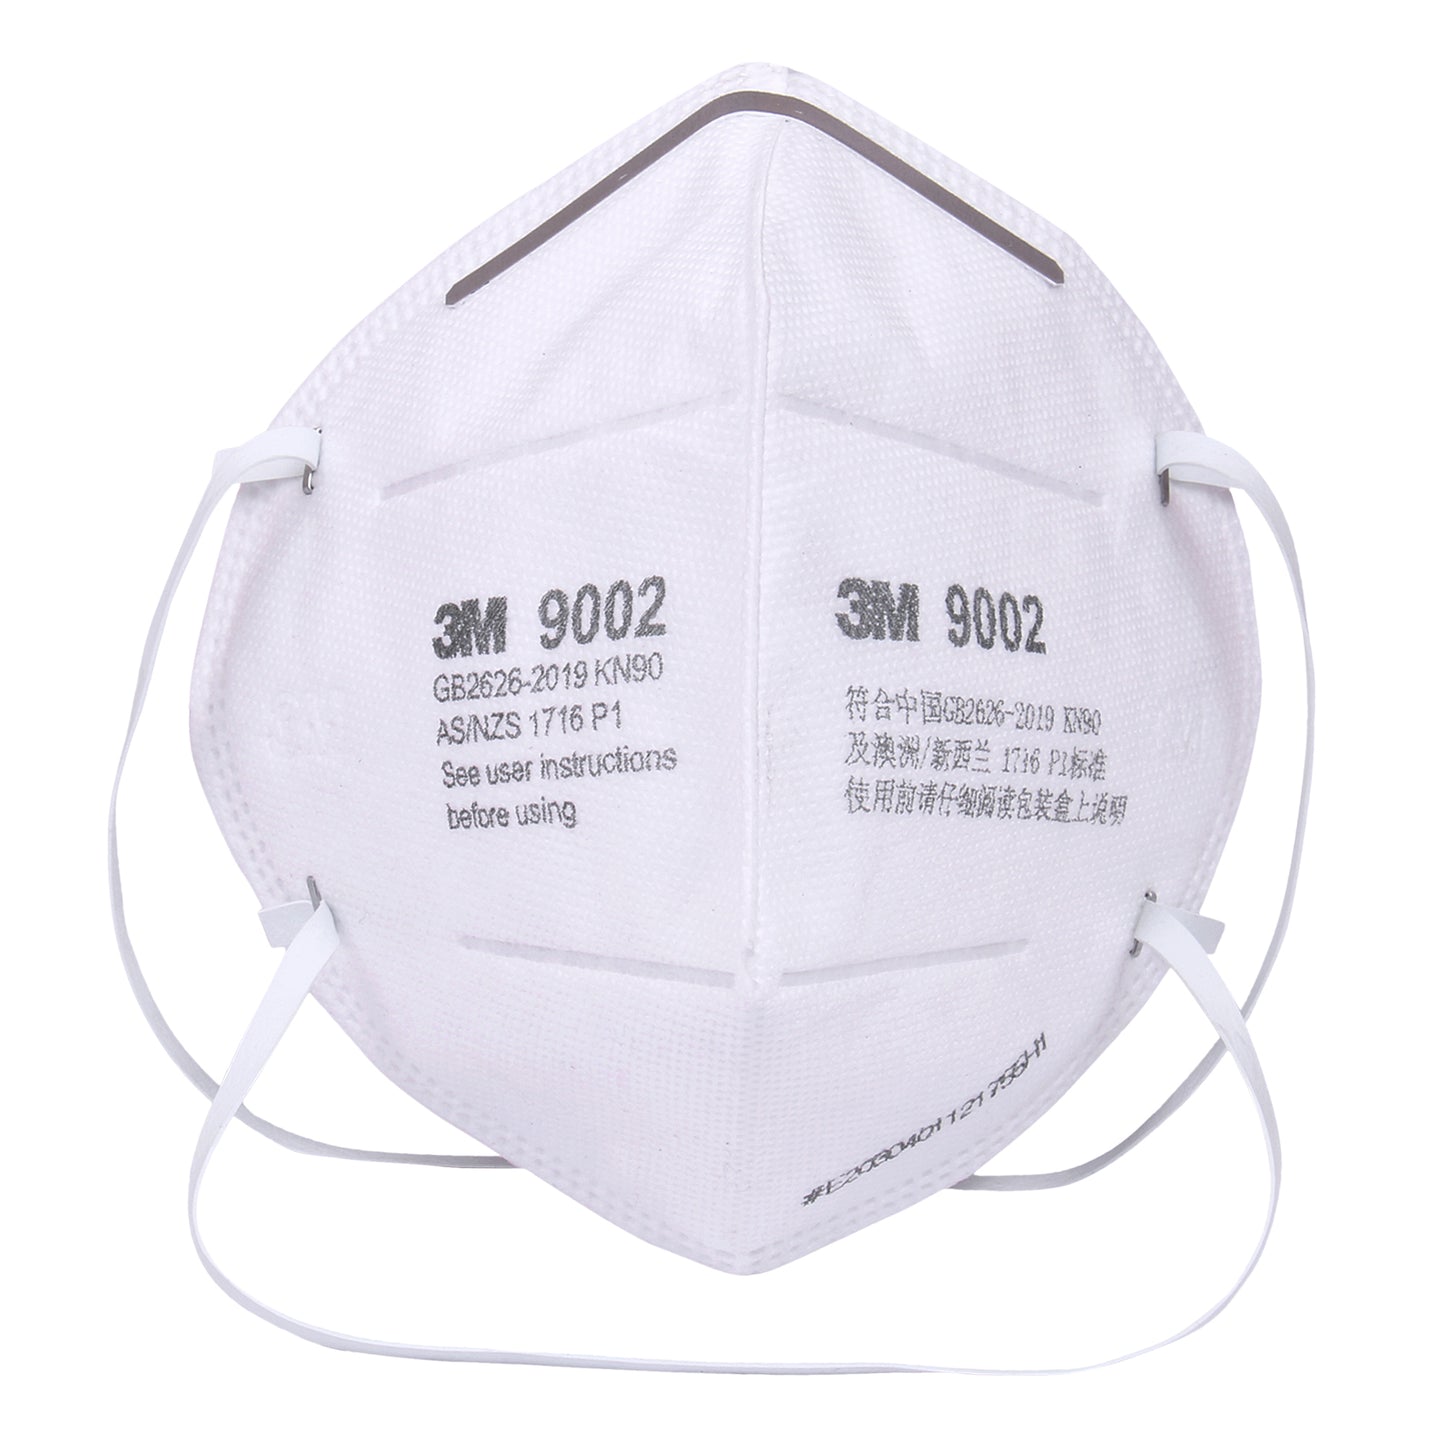 3M 9002 KN90/P1 Particulate Respirator